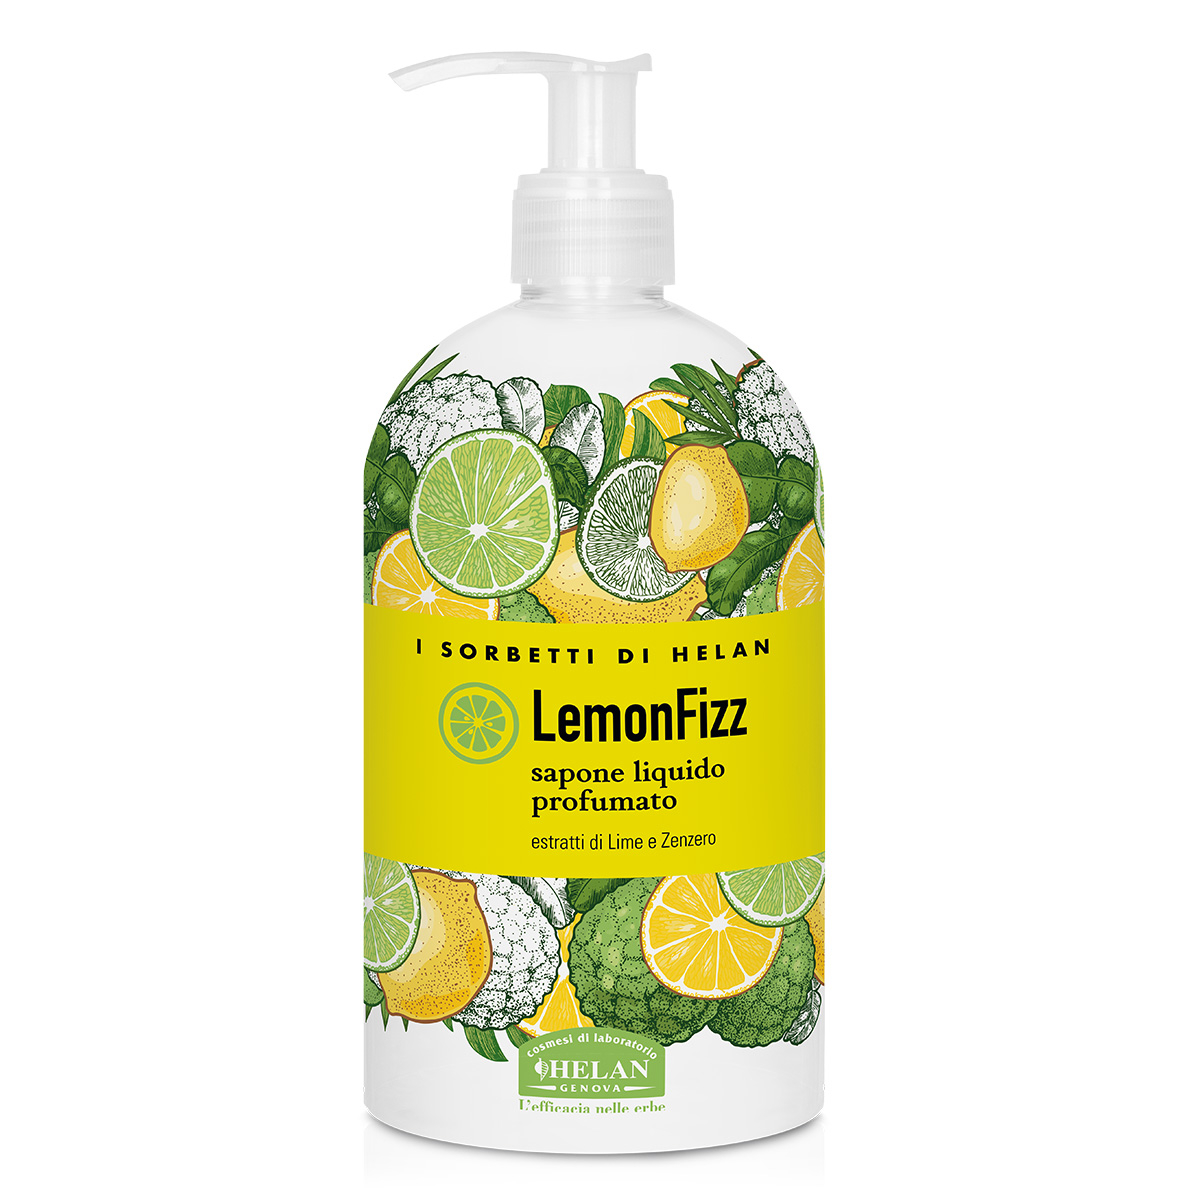 Image of I SORBETTI DI HELAN LemonFizz - Sapone Liquido Profumato 500ml